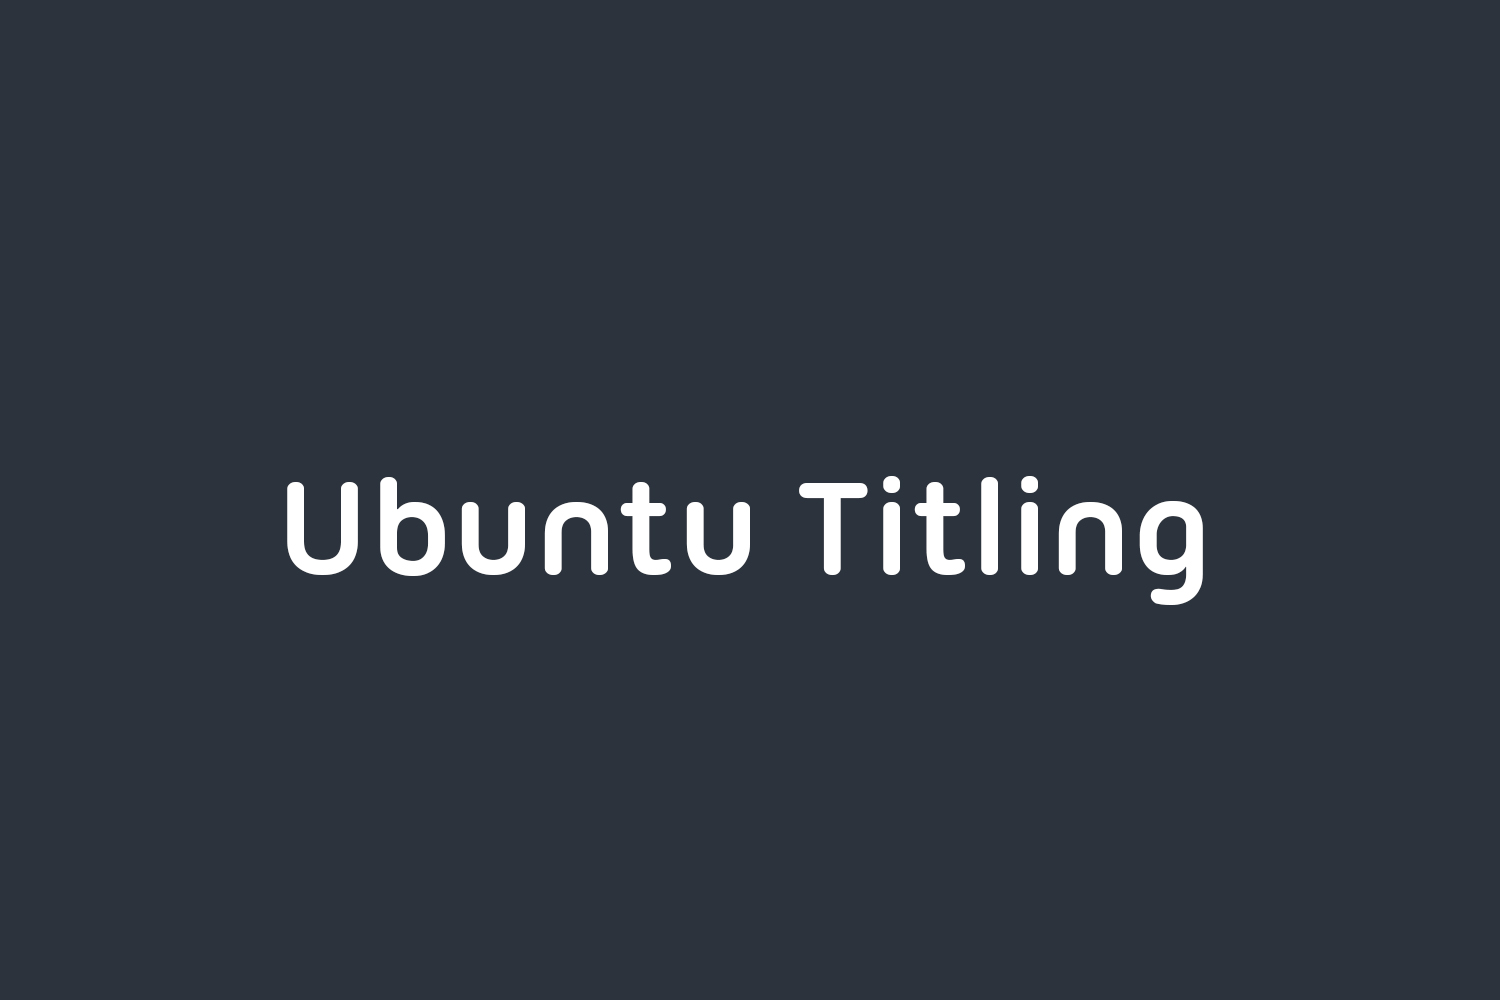 Ubuntu Titling